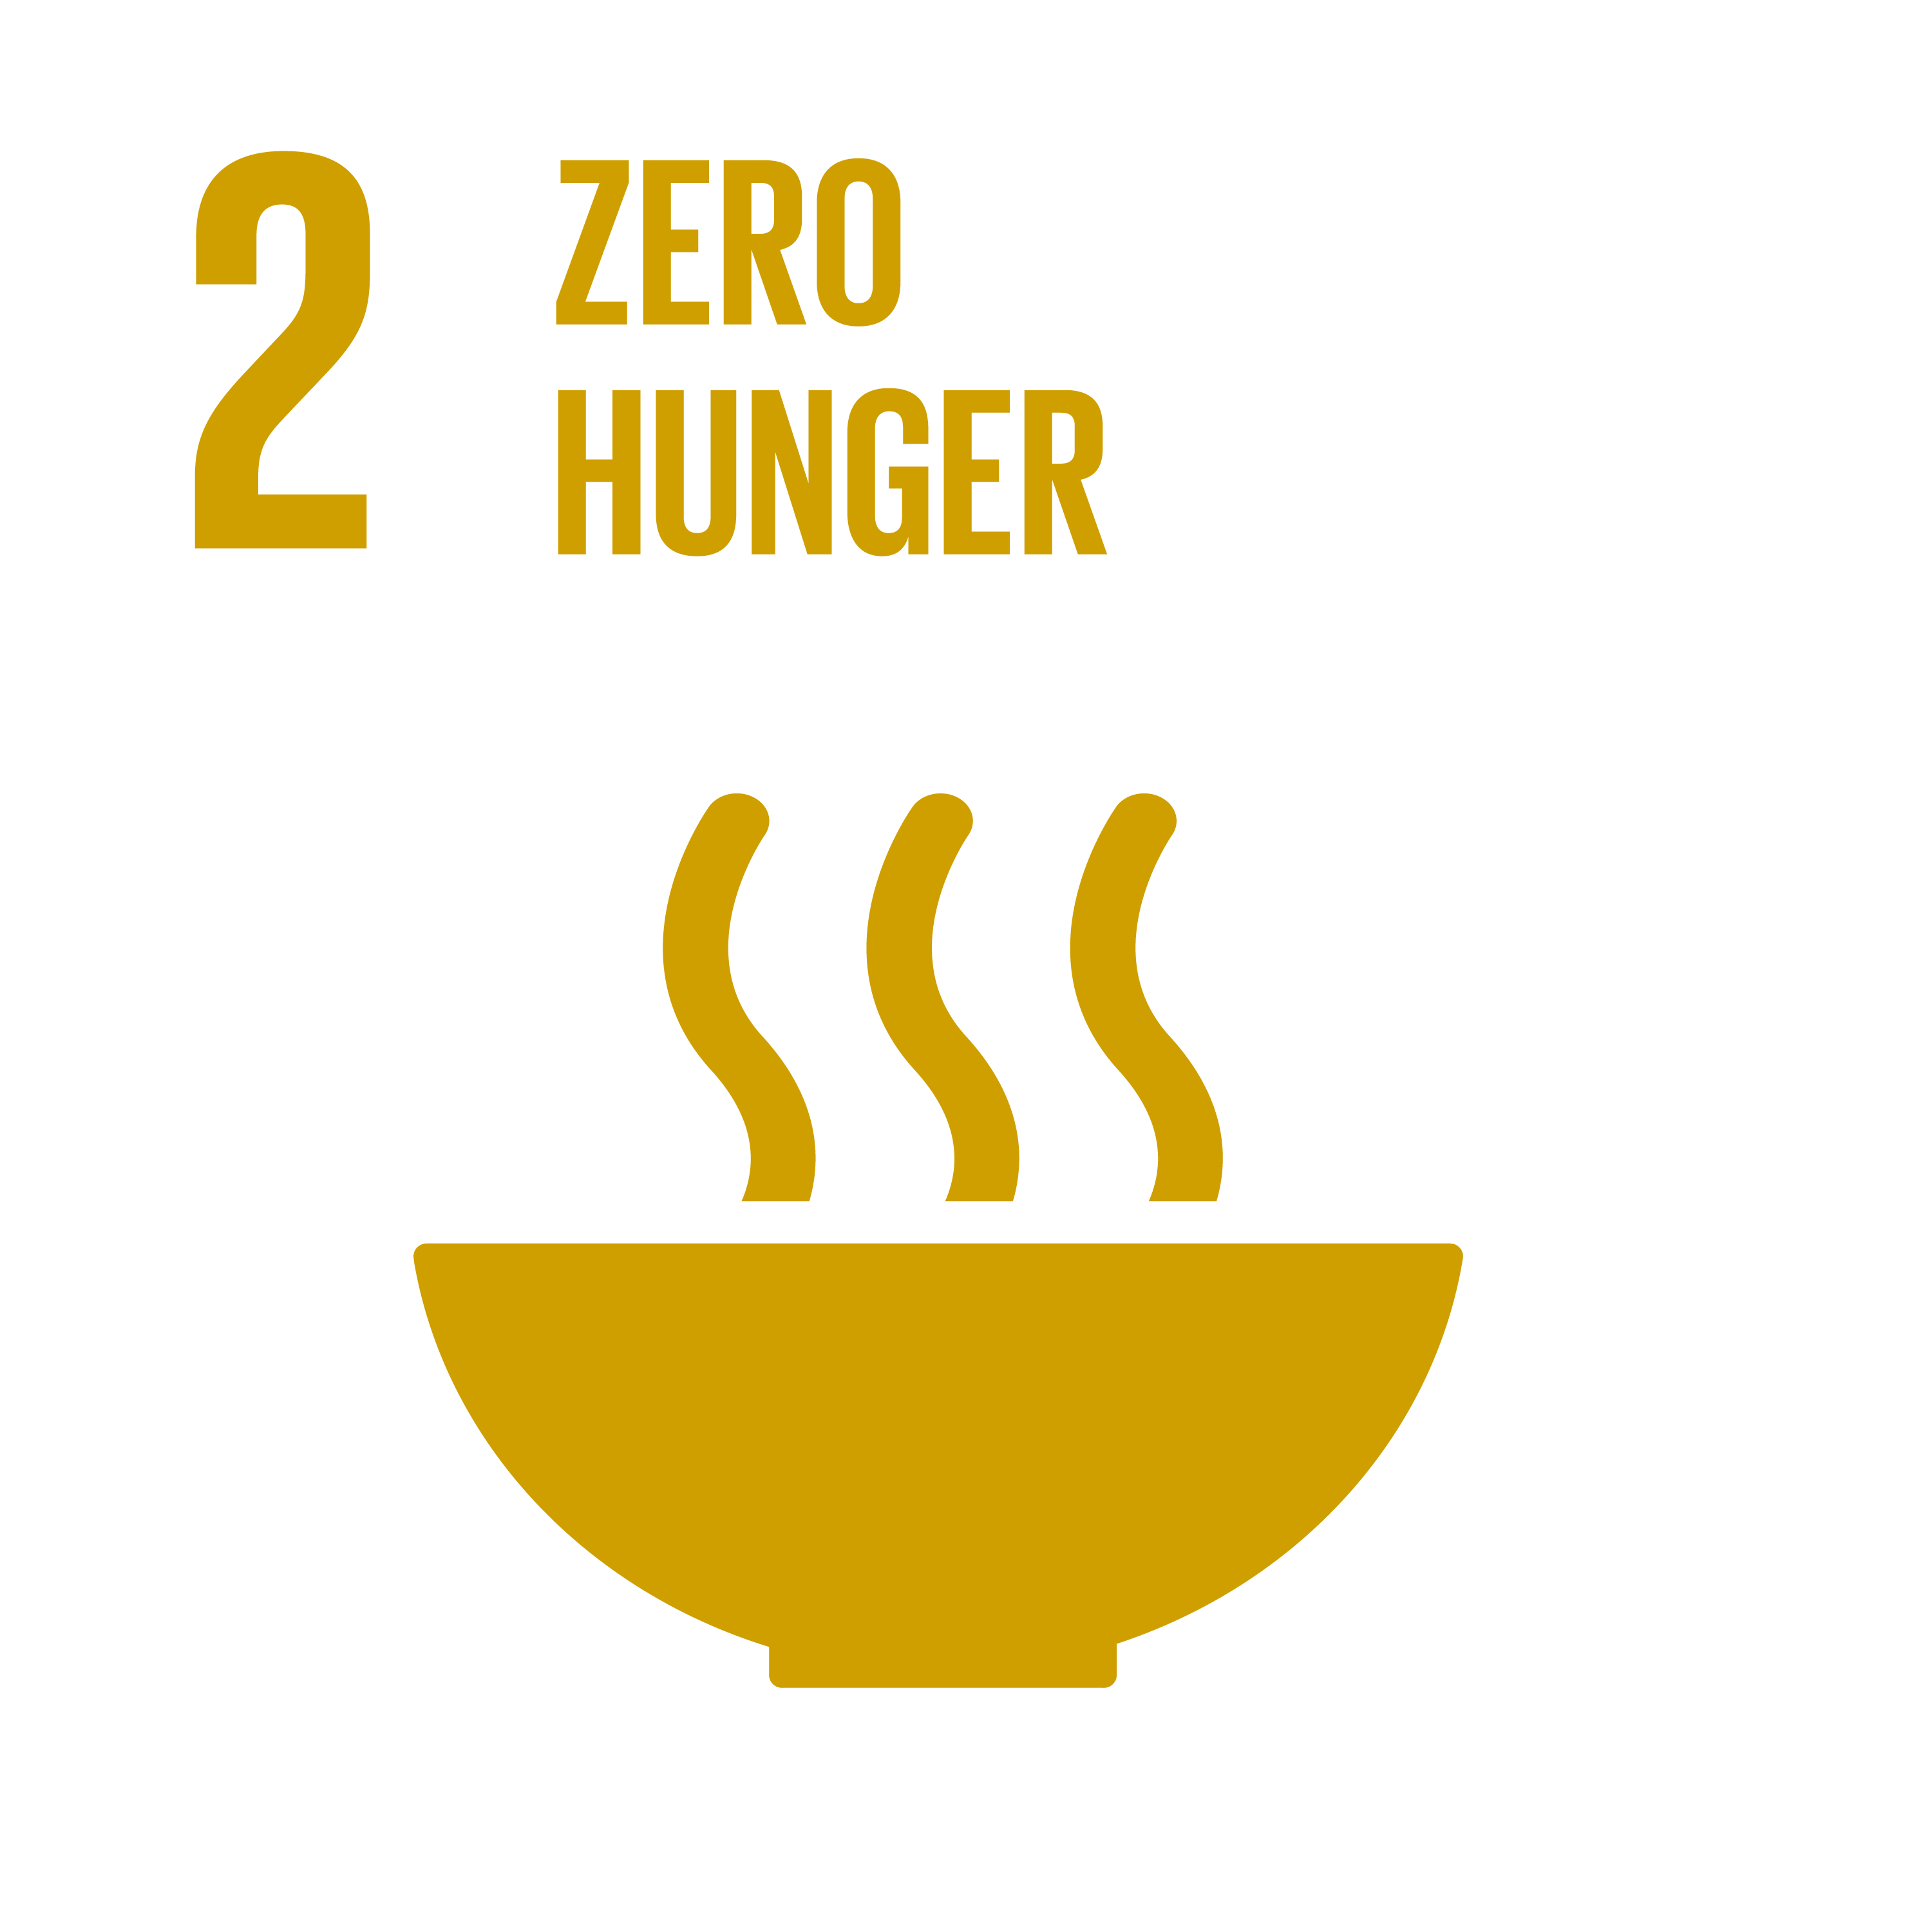 Sustainable development goals: Zero hunger